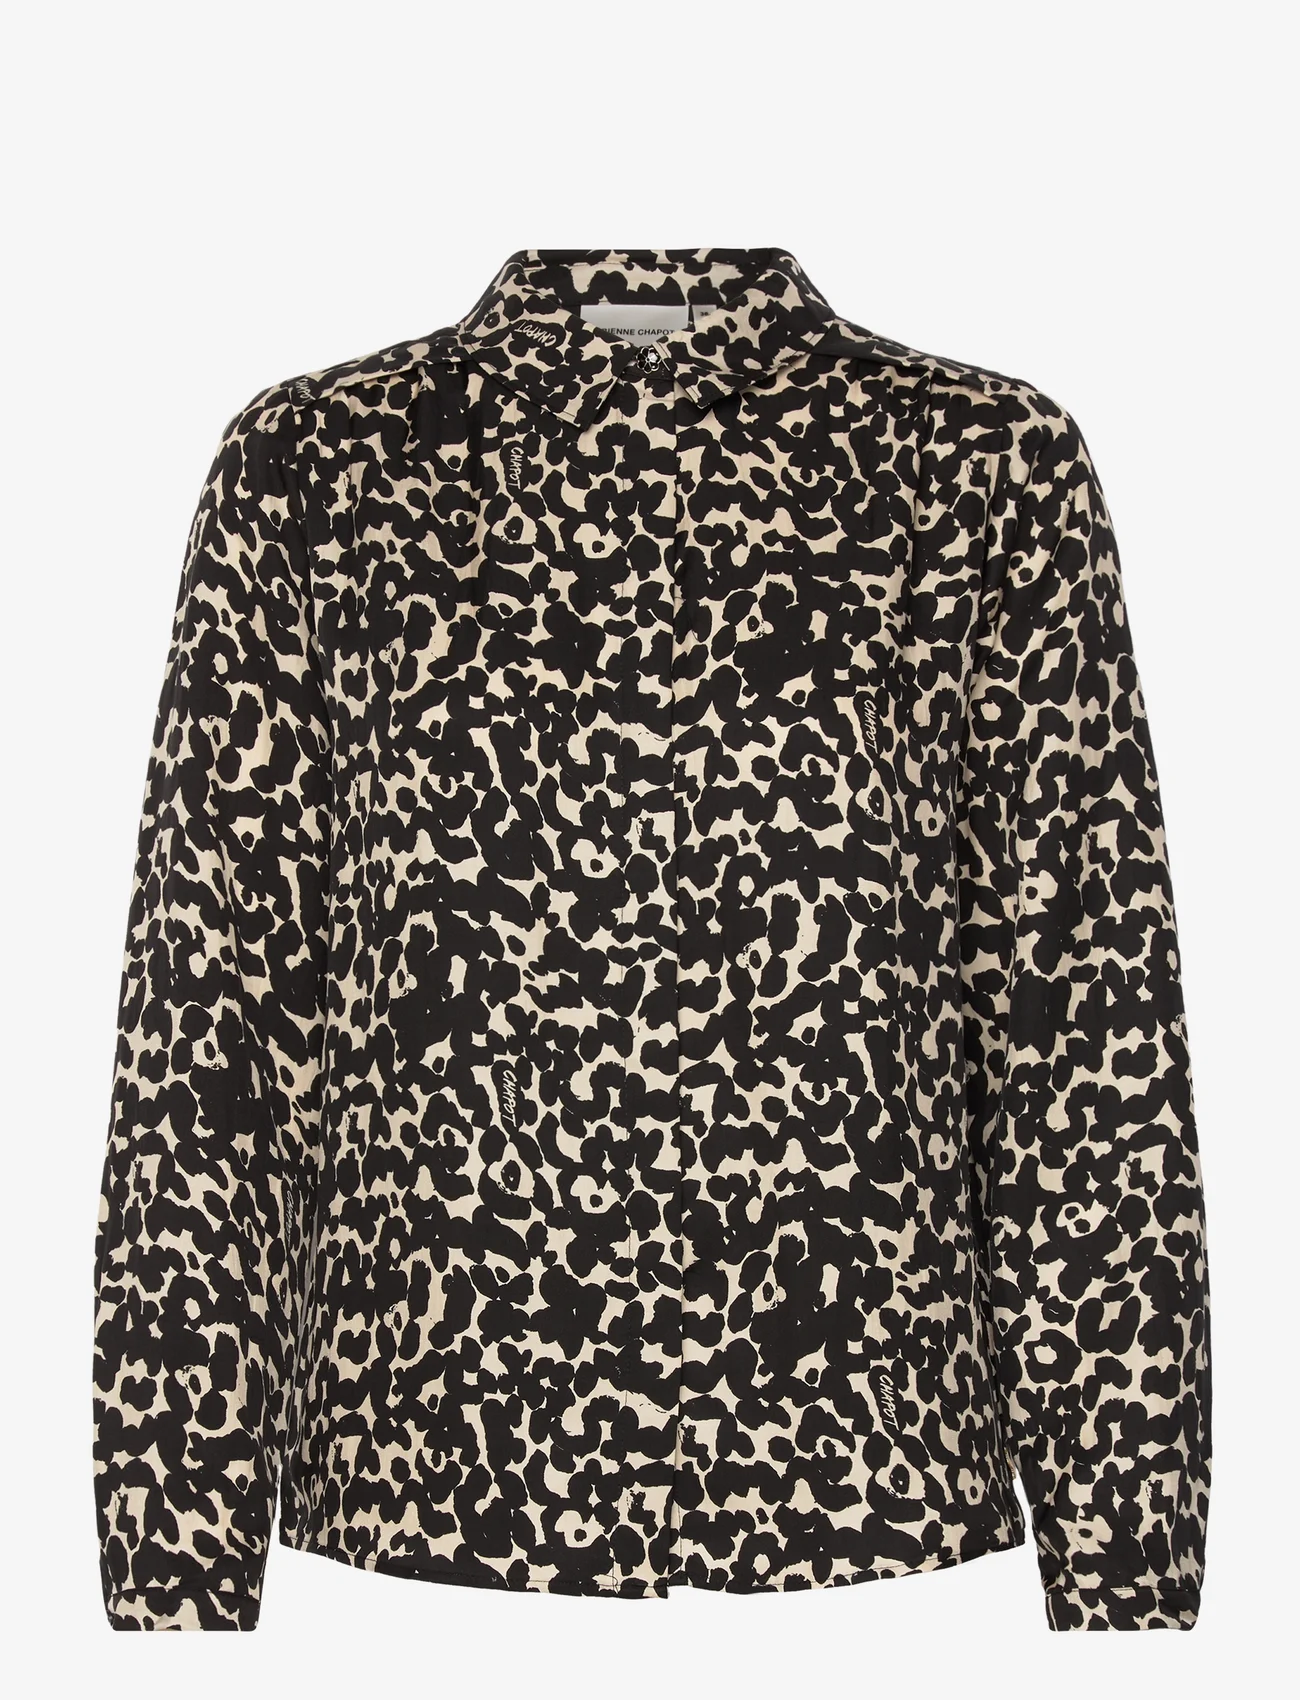 Fabienne Chapot - Sunrise Blouse - blouses met lange mouwen - black/oat melange - 0